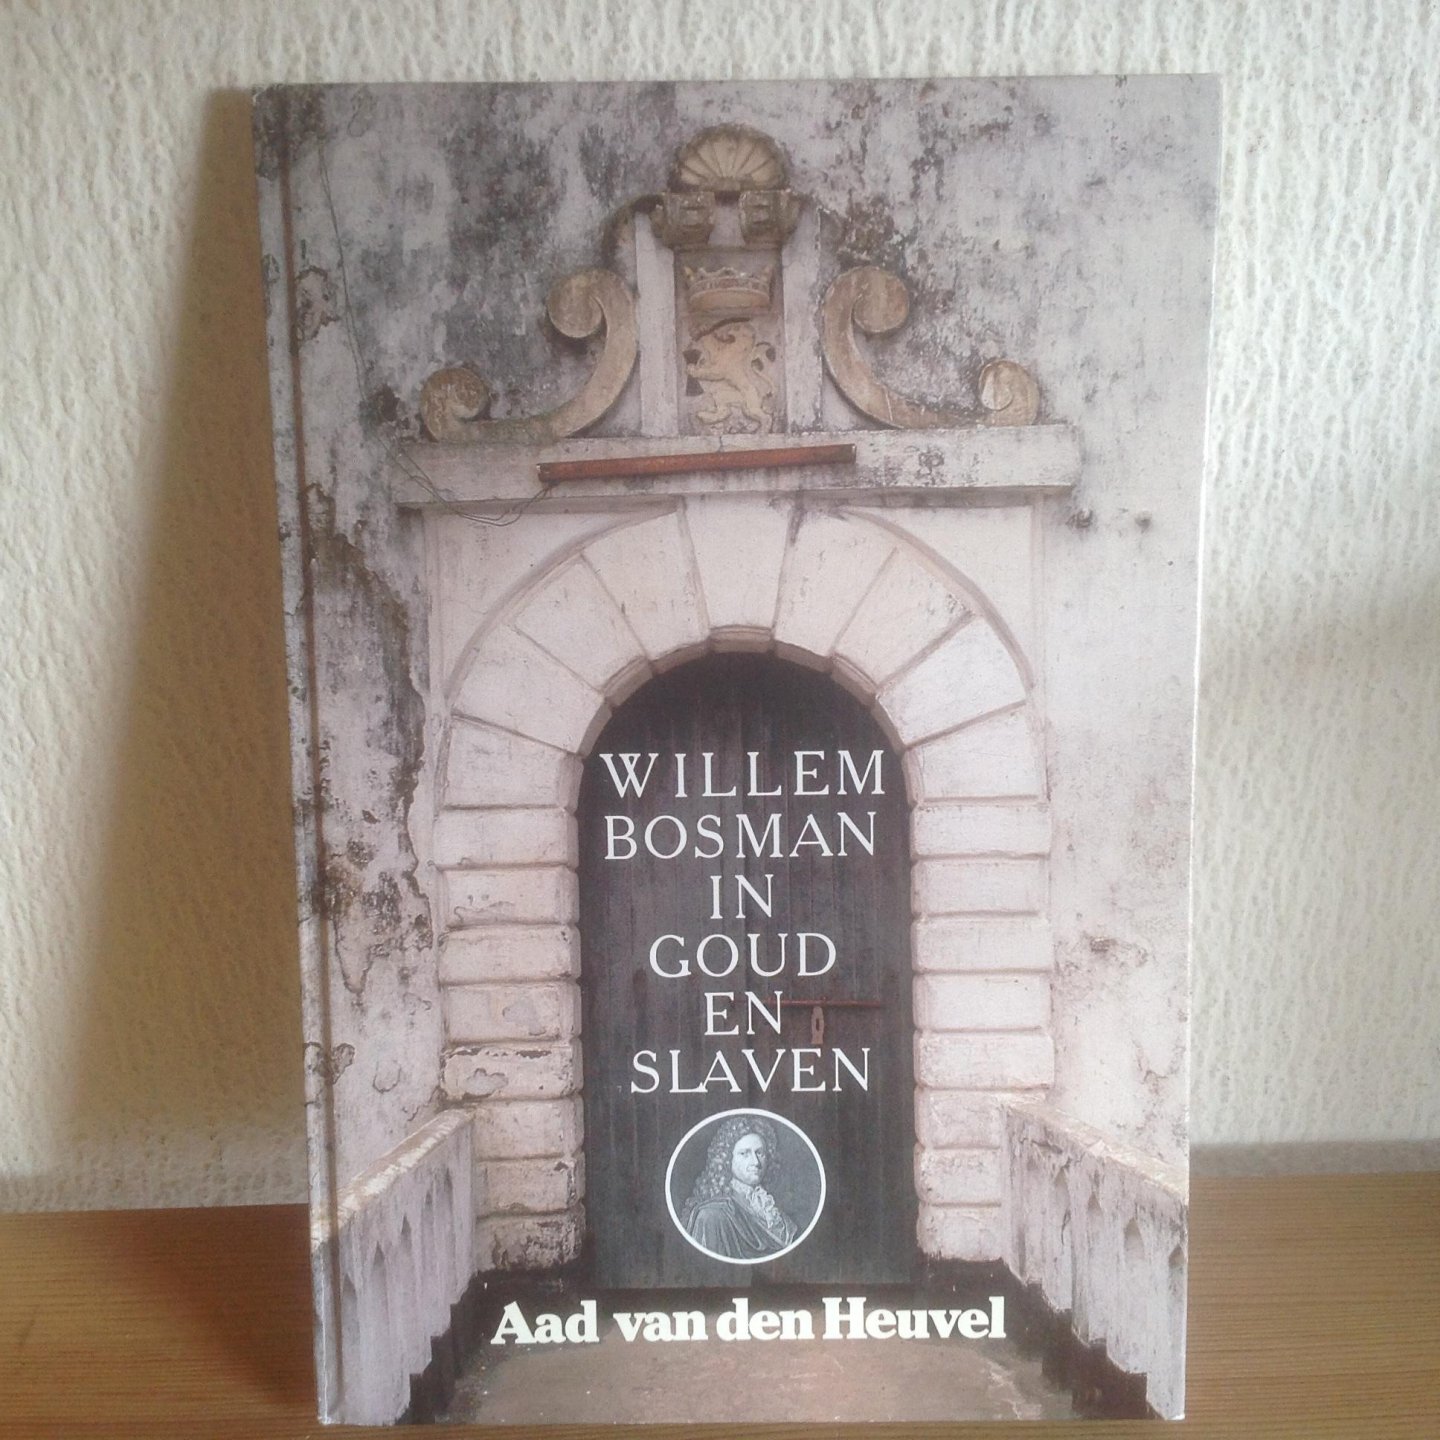 Heuvel - Willem bosman in goud en slaven / druk 1